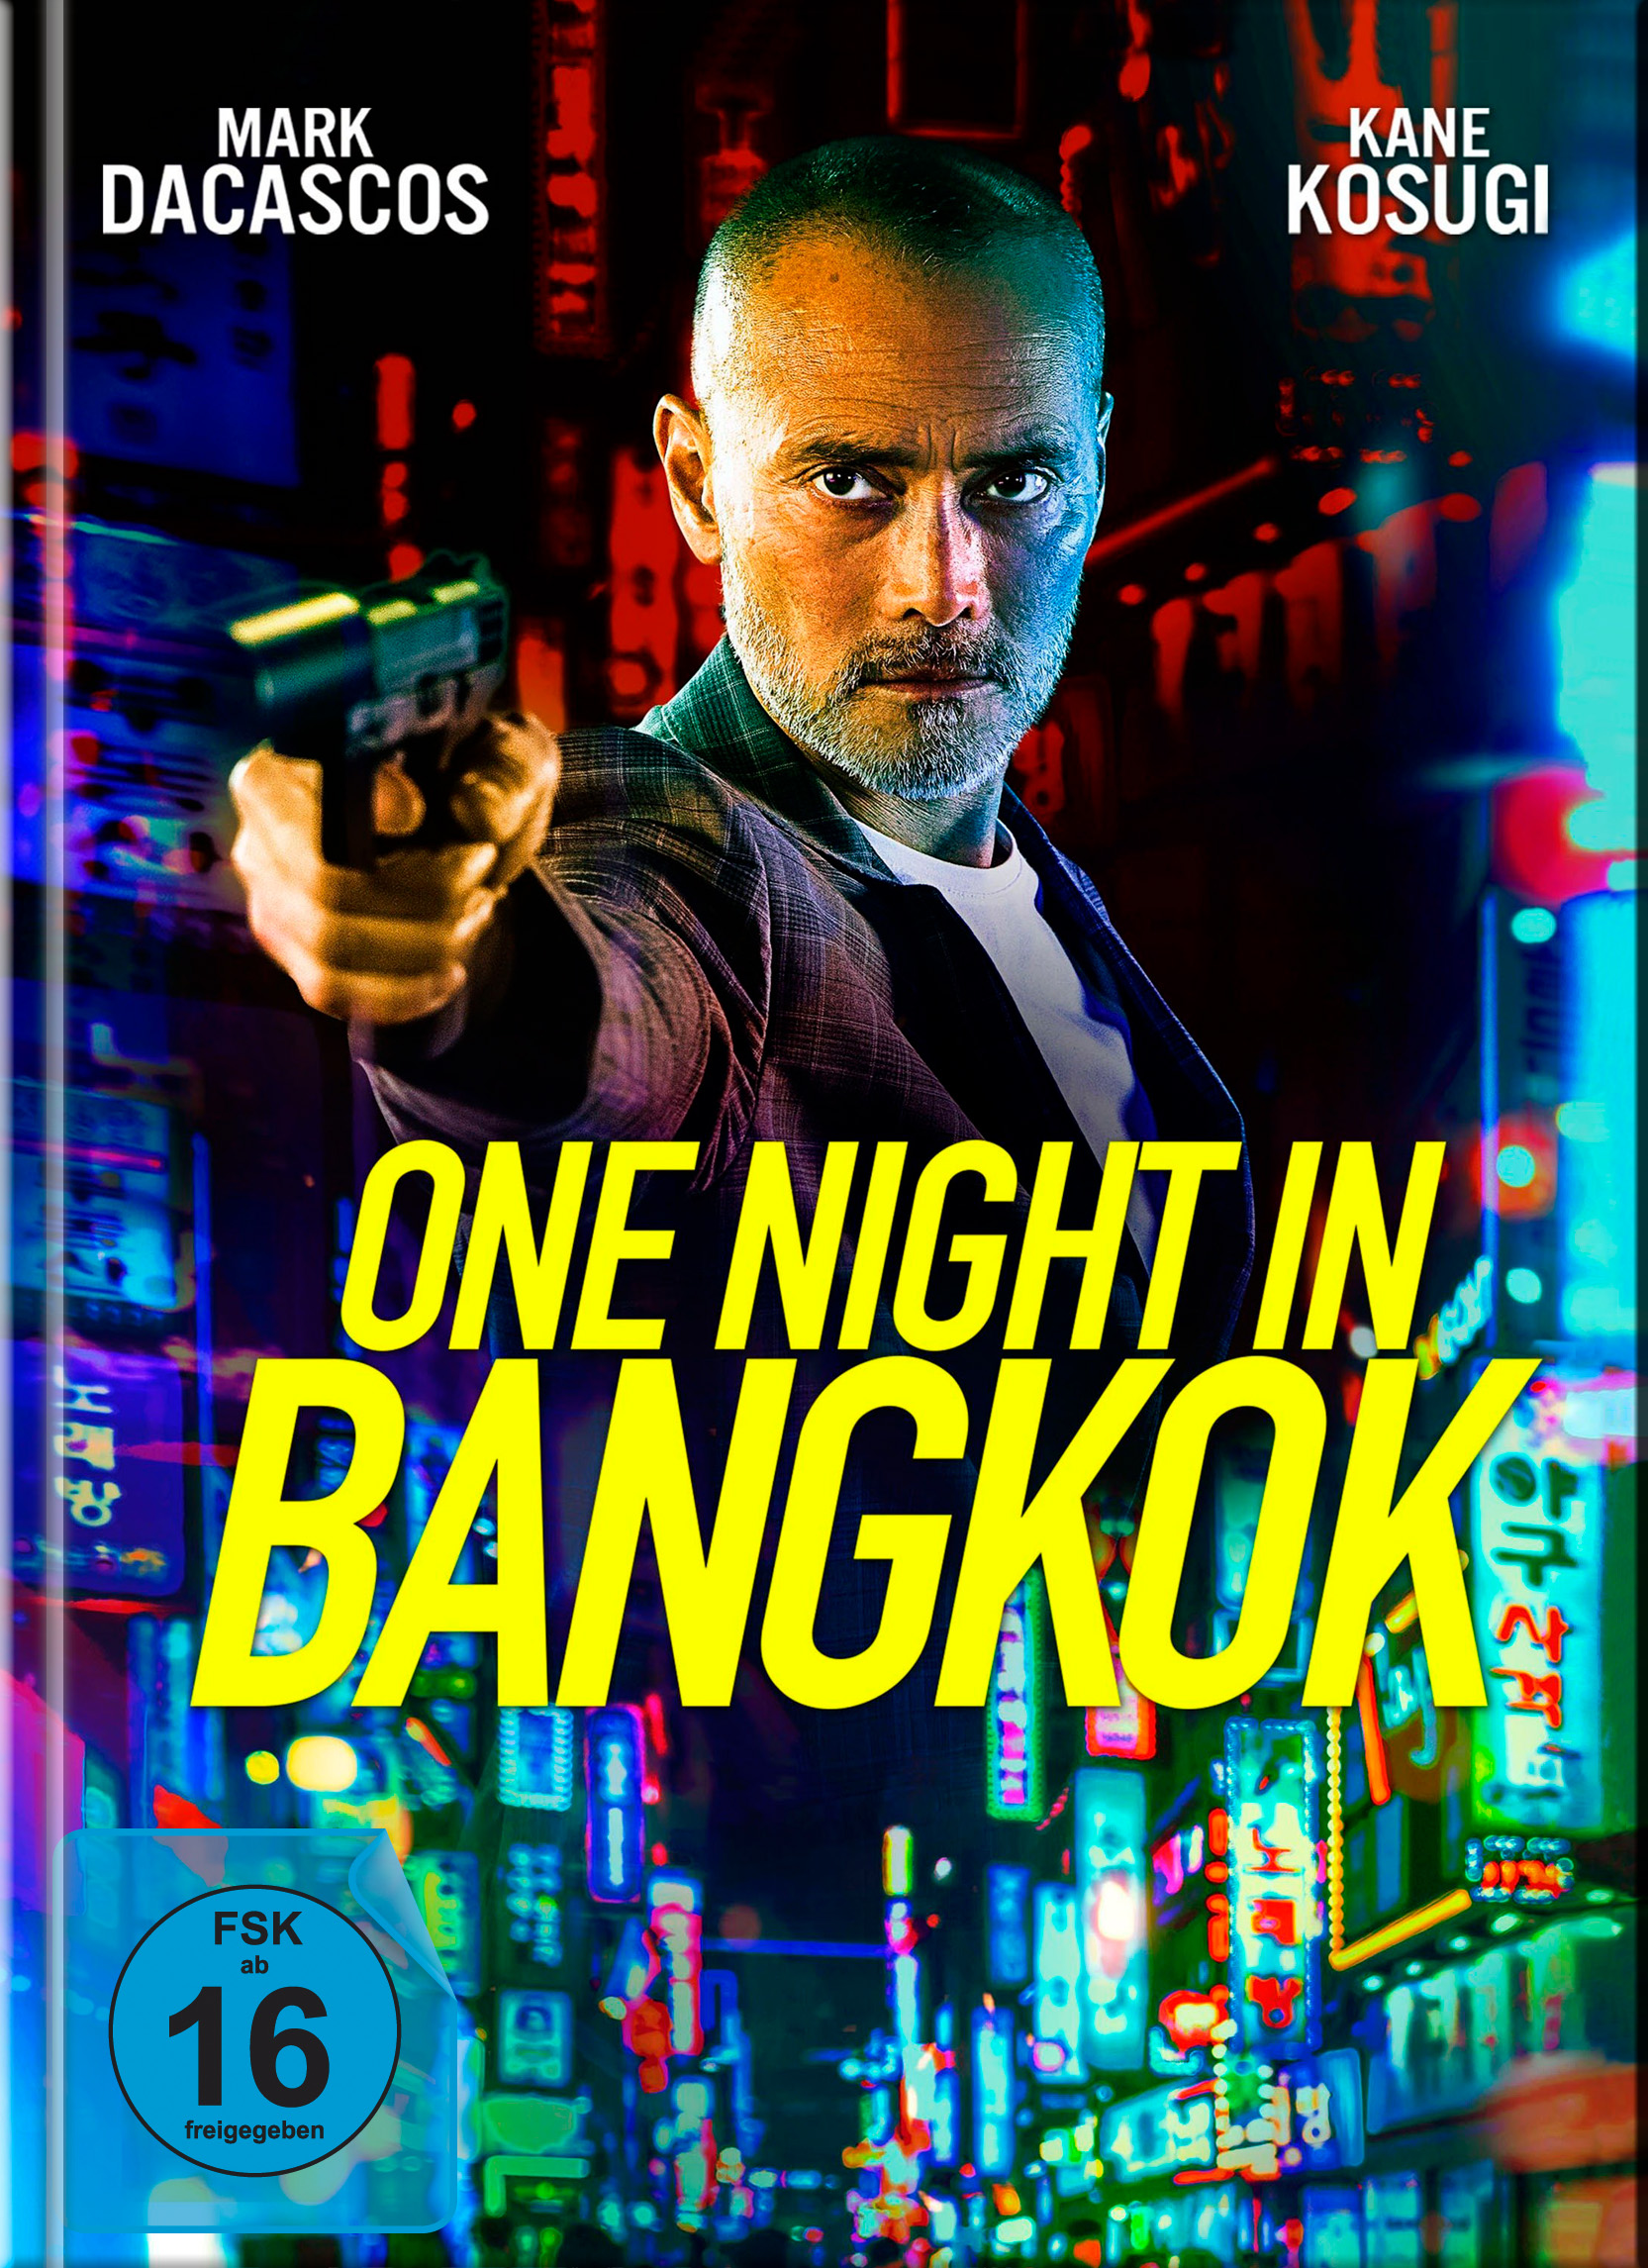 One Night In Bangkok (Blu-ray + DVD) (Mediabook)